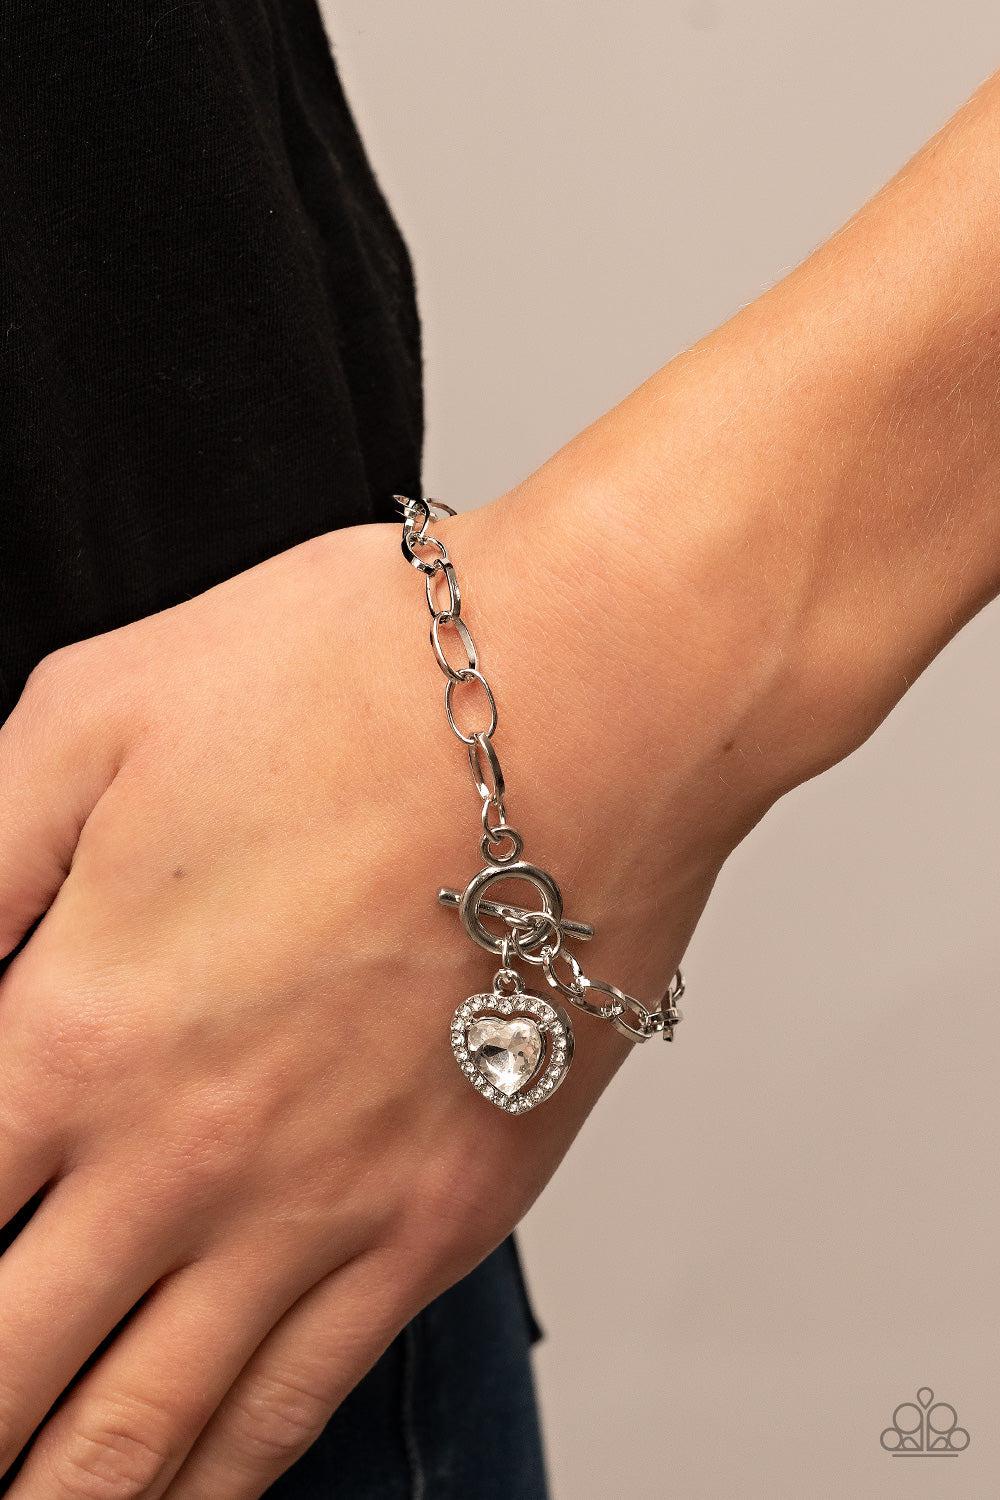 Till DAZZLE Do Us Part White Rhinestone Heart Bracelet - Paparazzi Accessories- lightbox - CarasShop.com - $5 Jewelry by Cara Jewels